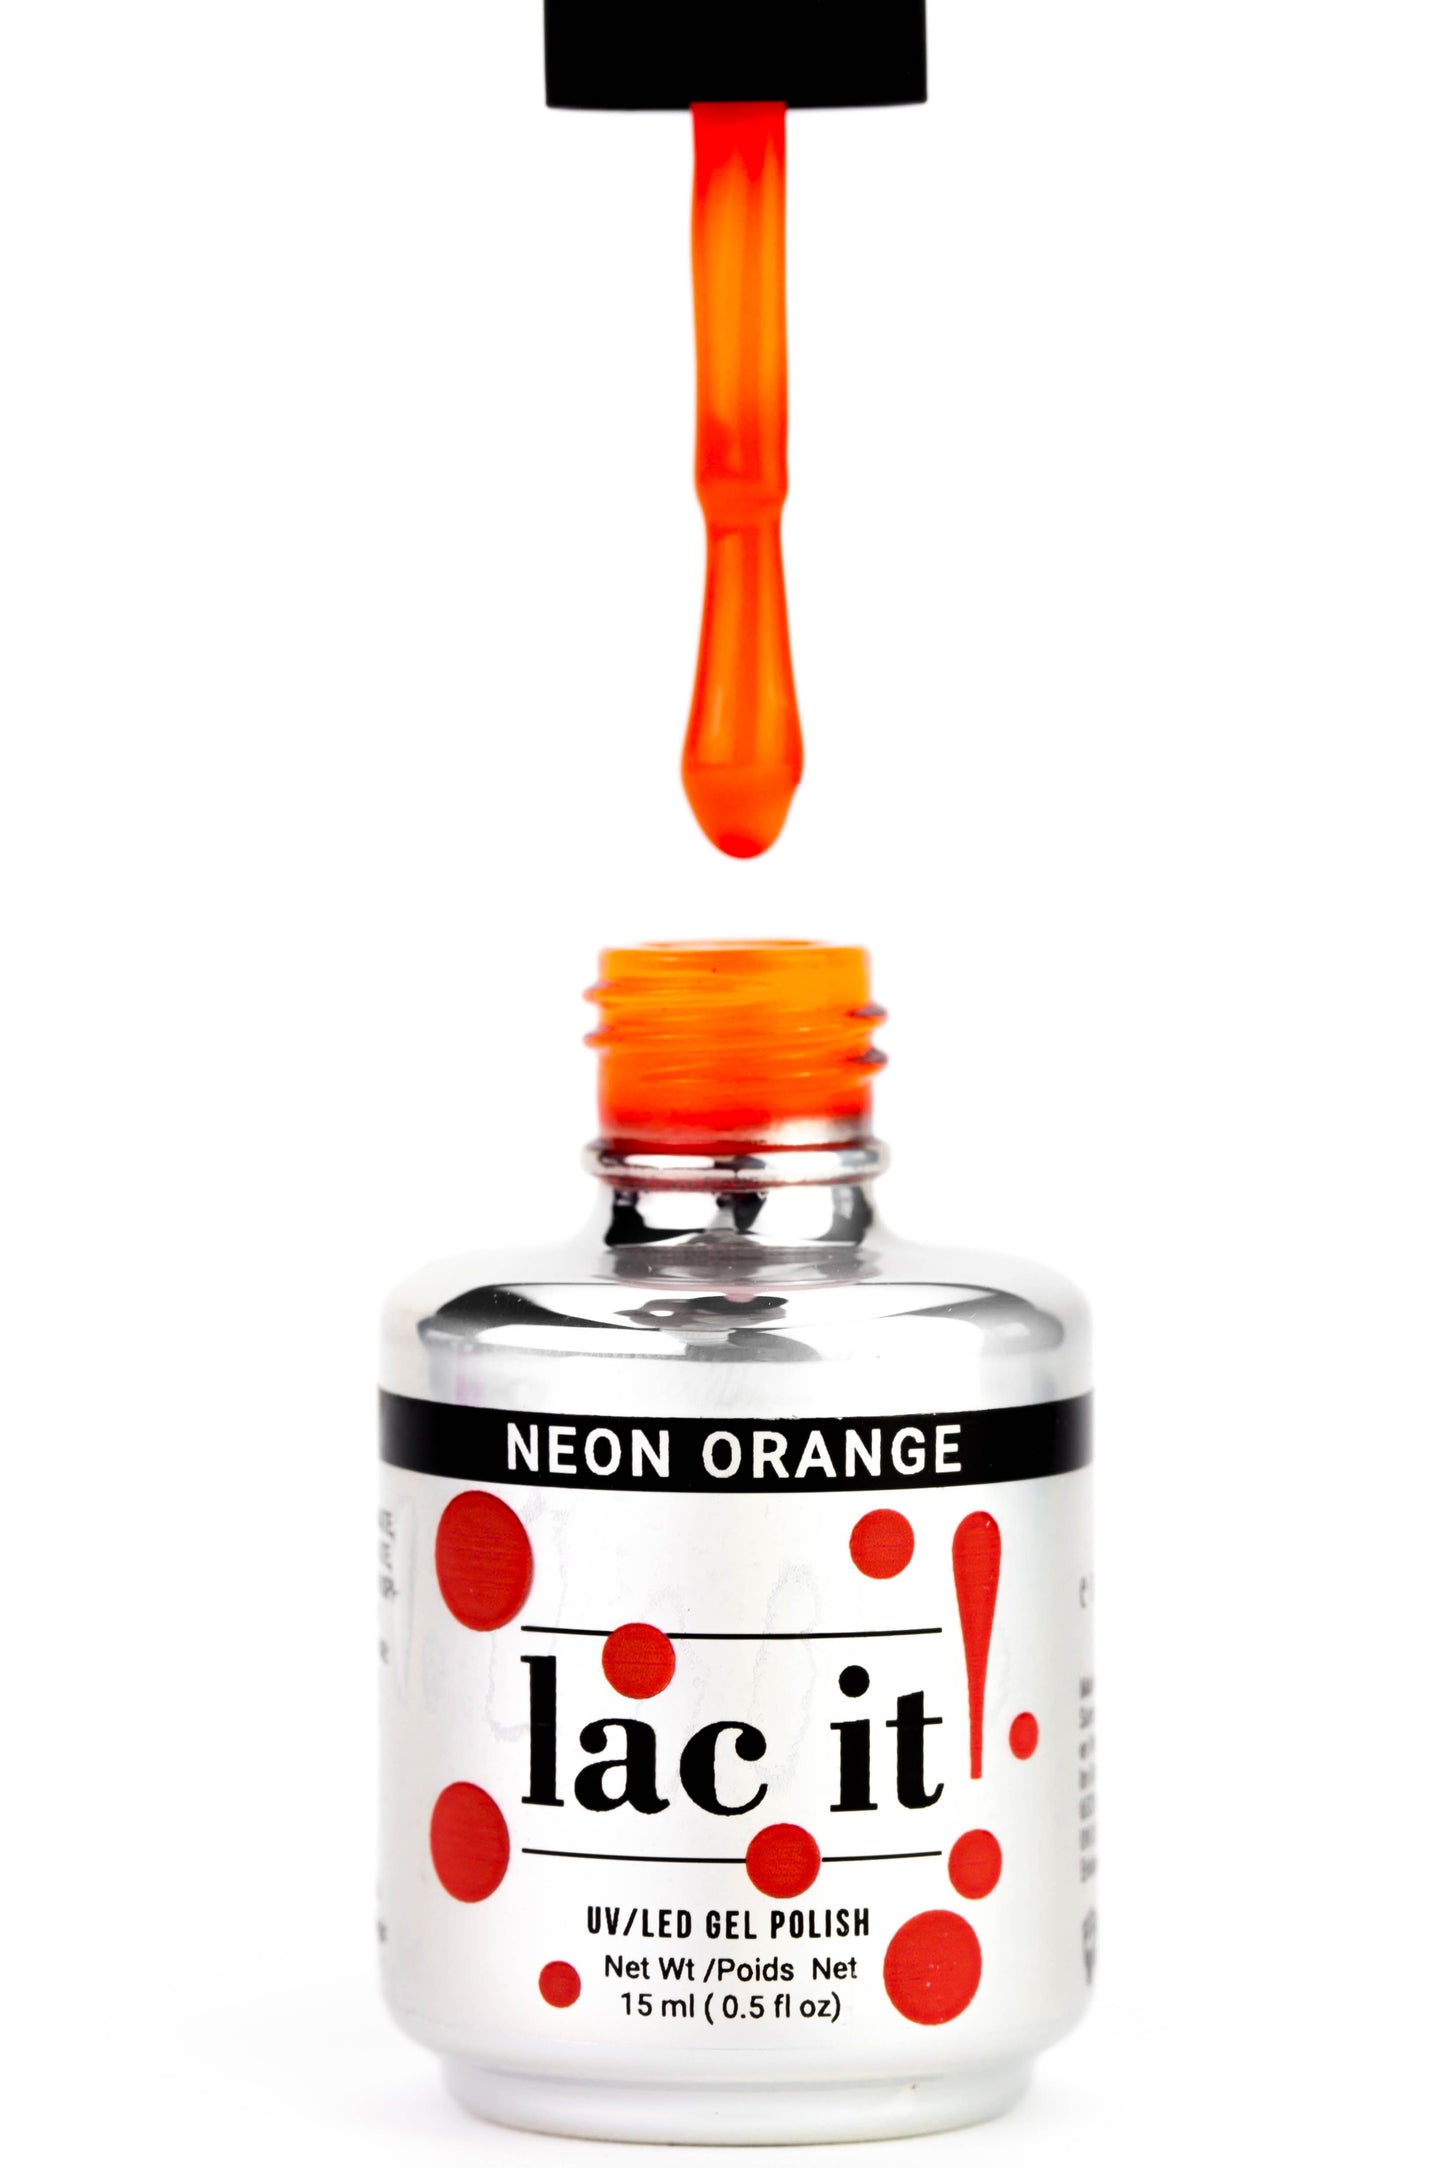 Neon Orange - lac it! Gel Polish